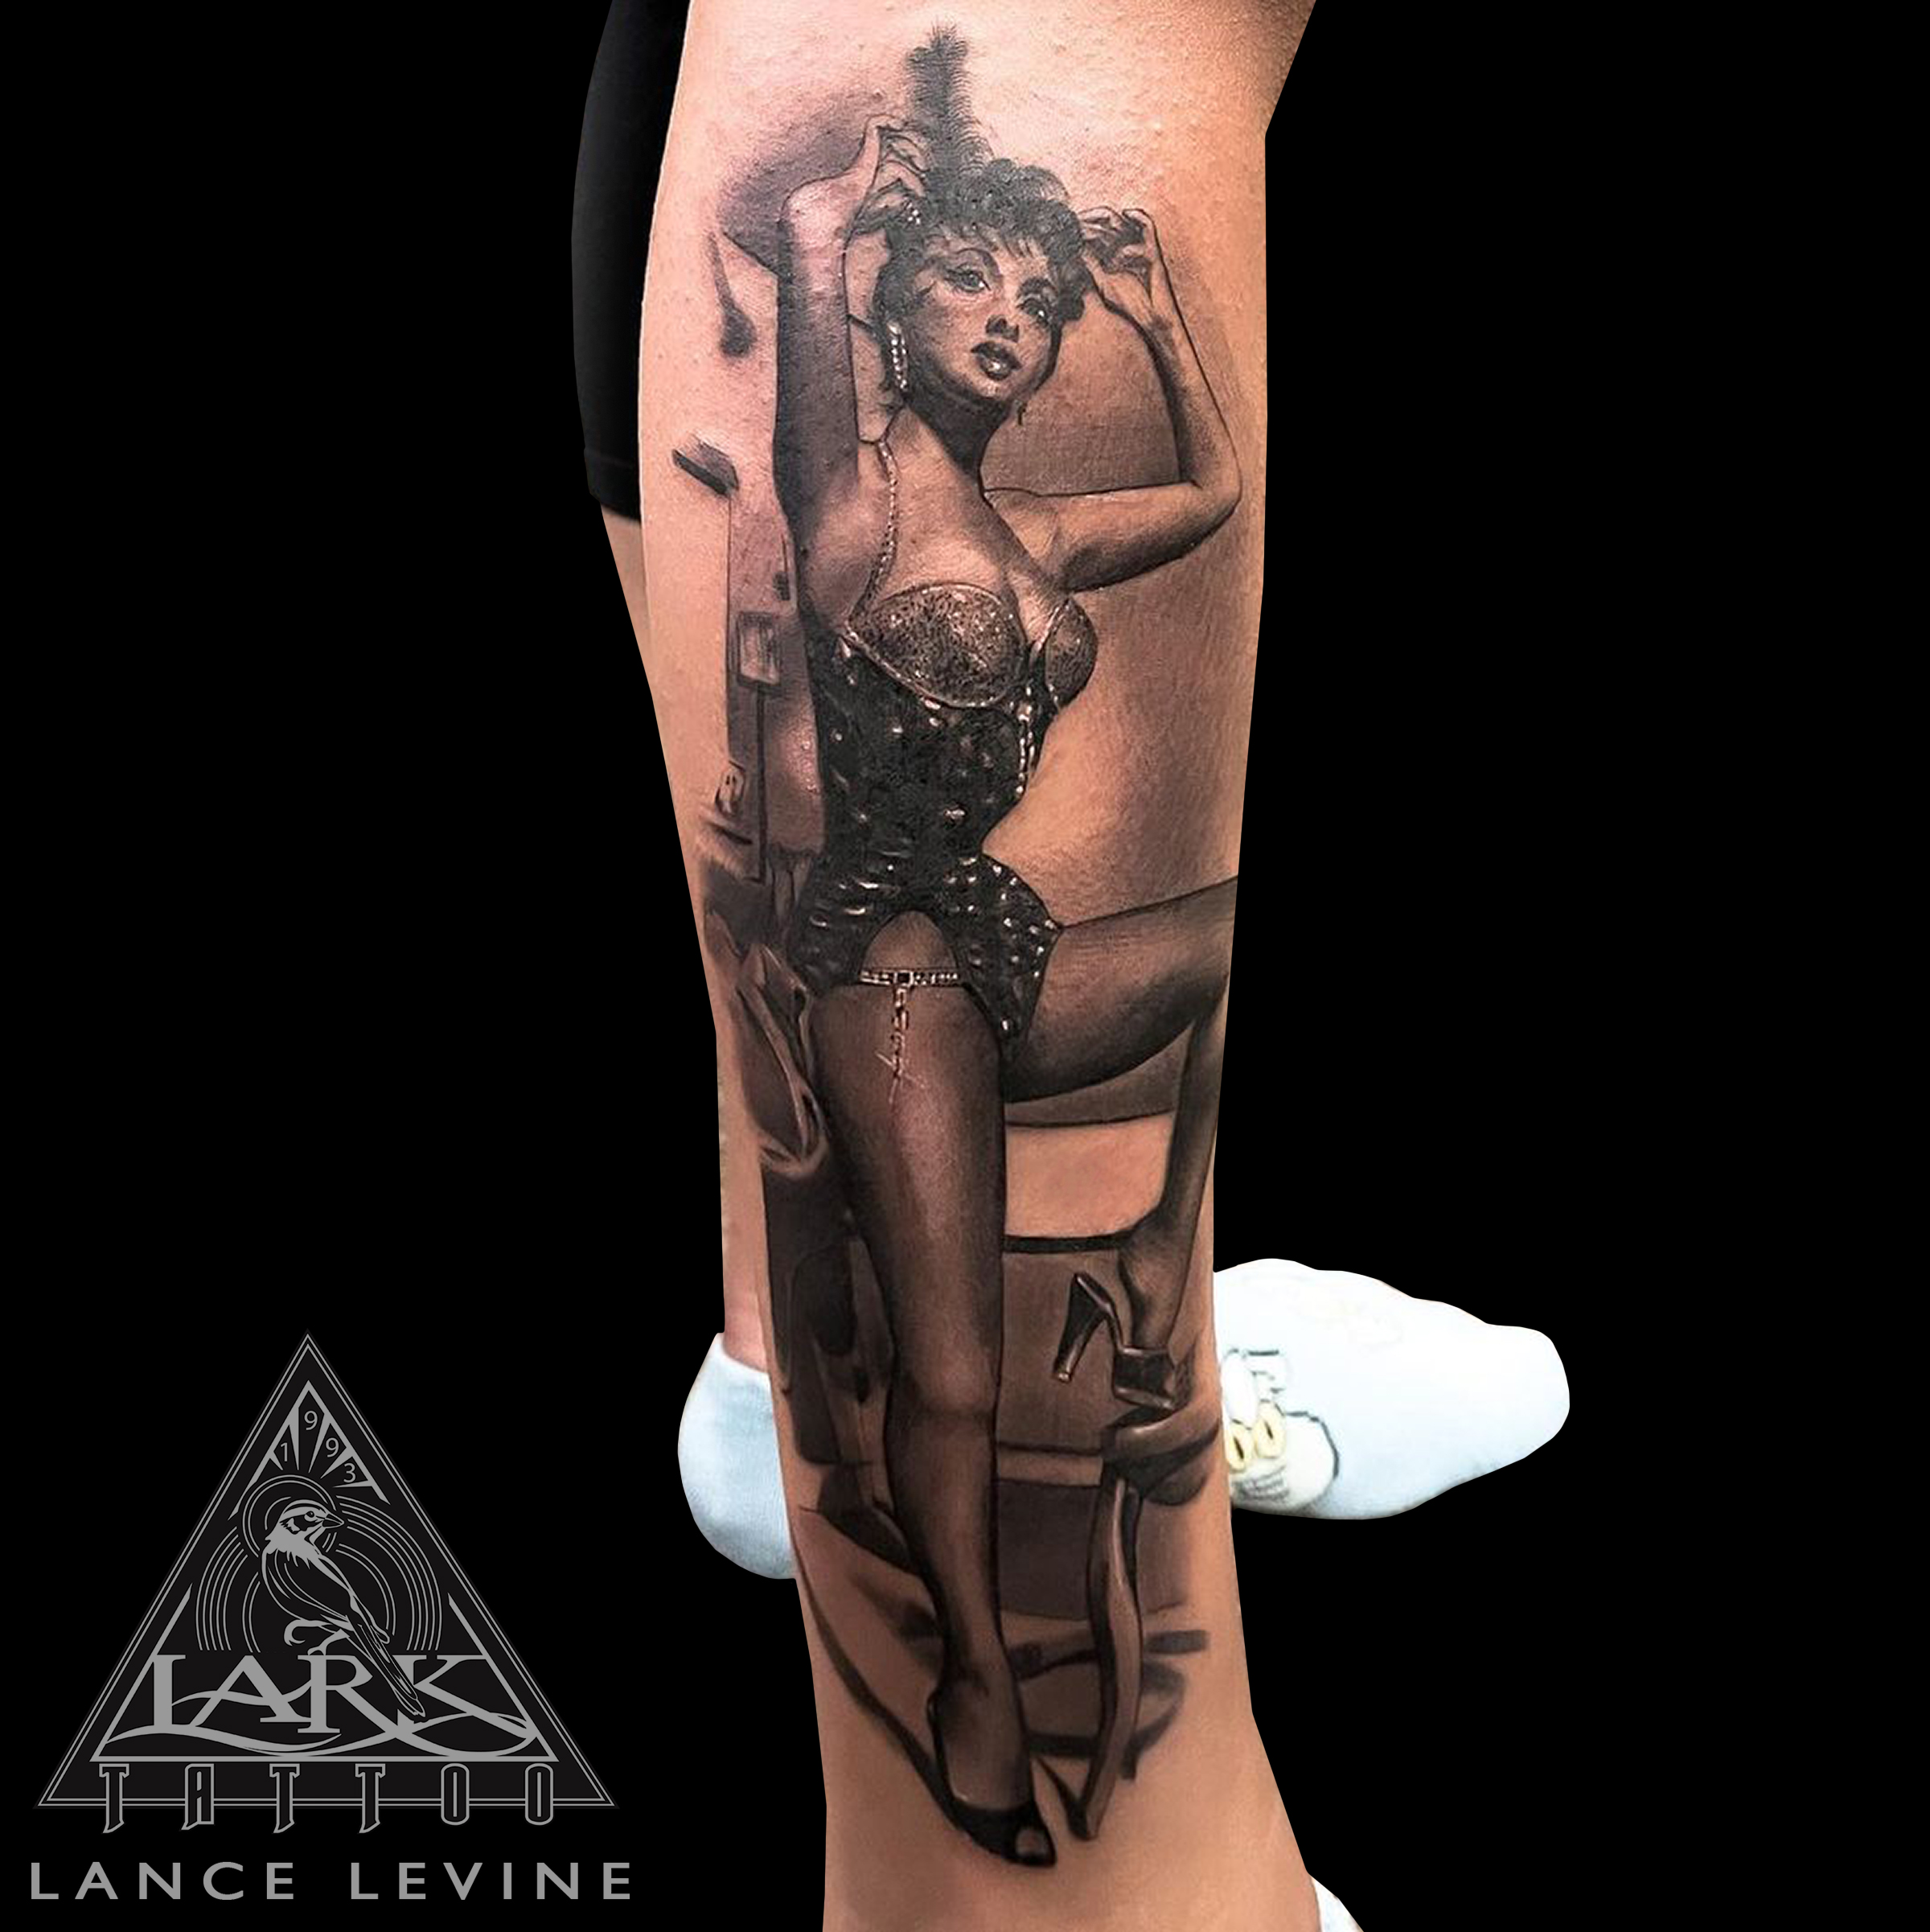 #LarkTattoo #Tattoo #Tattoos #LanceLevine #LanceLevineLarkTattoo #TattooArtist #Tattoist #Tattooer #LongIslandTattooArtist #LongIslandTattooer #LongIslandTattoo #TattooOfTheDay #Ginalollobrigida #GinalollobrigidaTattoo #Pinup #PinupTattoo #Realistic #RealisticTattoo #BNG #BNGTattoo #BlackAndGray #BlackAndGrayTattoo #BlackAndGrey #BlackAndGreyTattoo #BNGInkSociety #Bishopwand #heliosneedlecartridge #Tat #Tats #Tatts #Tatted #Inked #Ink #TattooInk #AmazingInk #AmazingTattoo #BodyArt #LarkTattooWestbury #Westbury #LongIsland #NY #NewYork #USA #Art #Tattedup #InkedUp #LarkTattoos